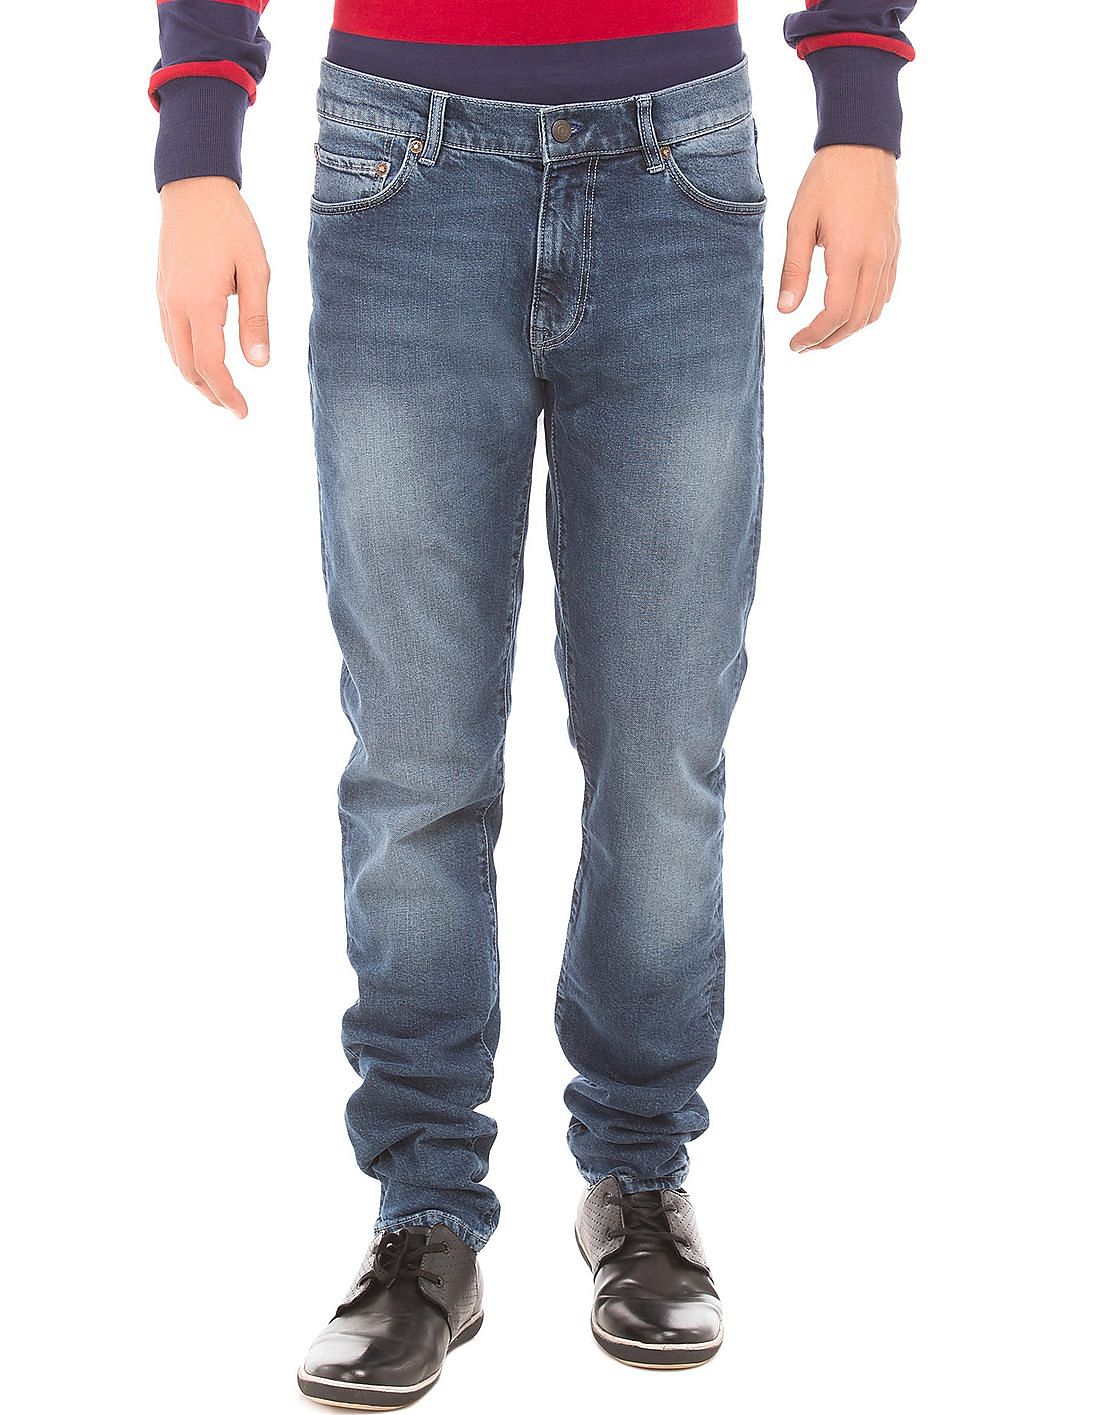 gant slim tapered jeans